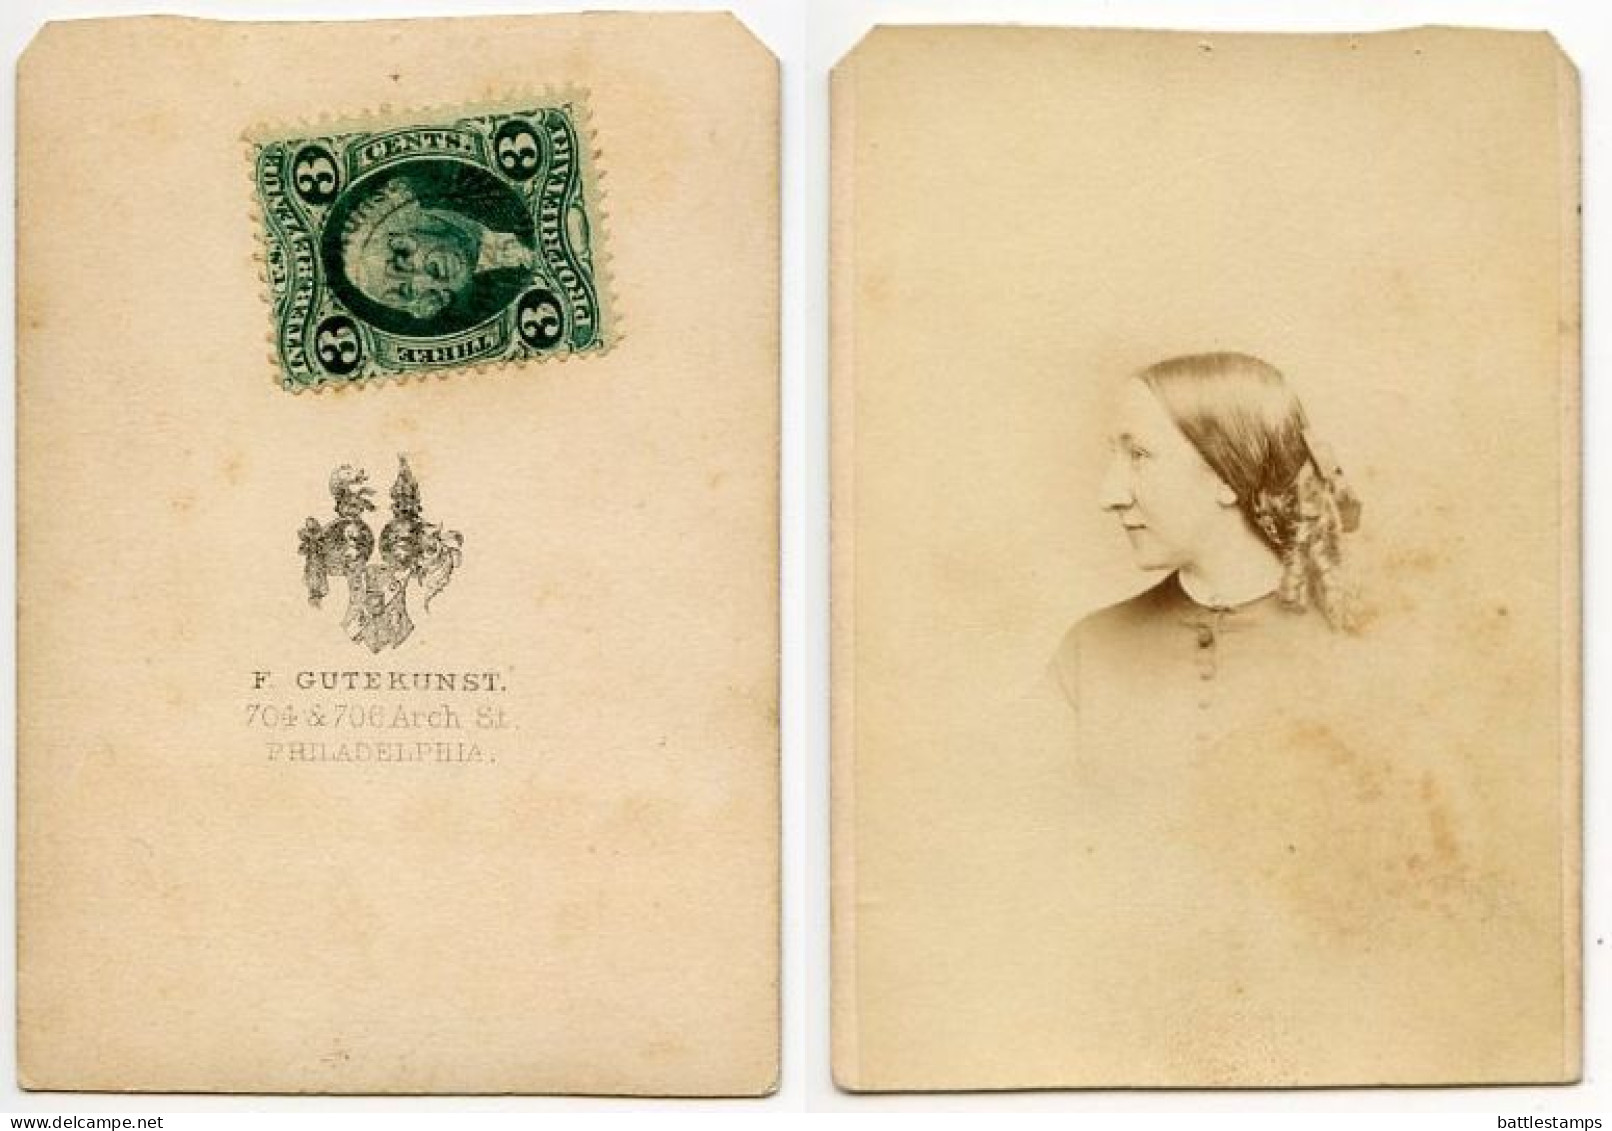 United States 1860‘s Photograph, Woman - F. Gutekun St., Philadelphia Pennsylvania, Scott R18c Revenue Stamp - Revenues